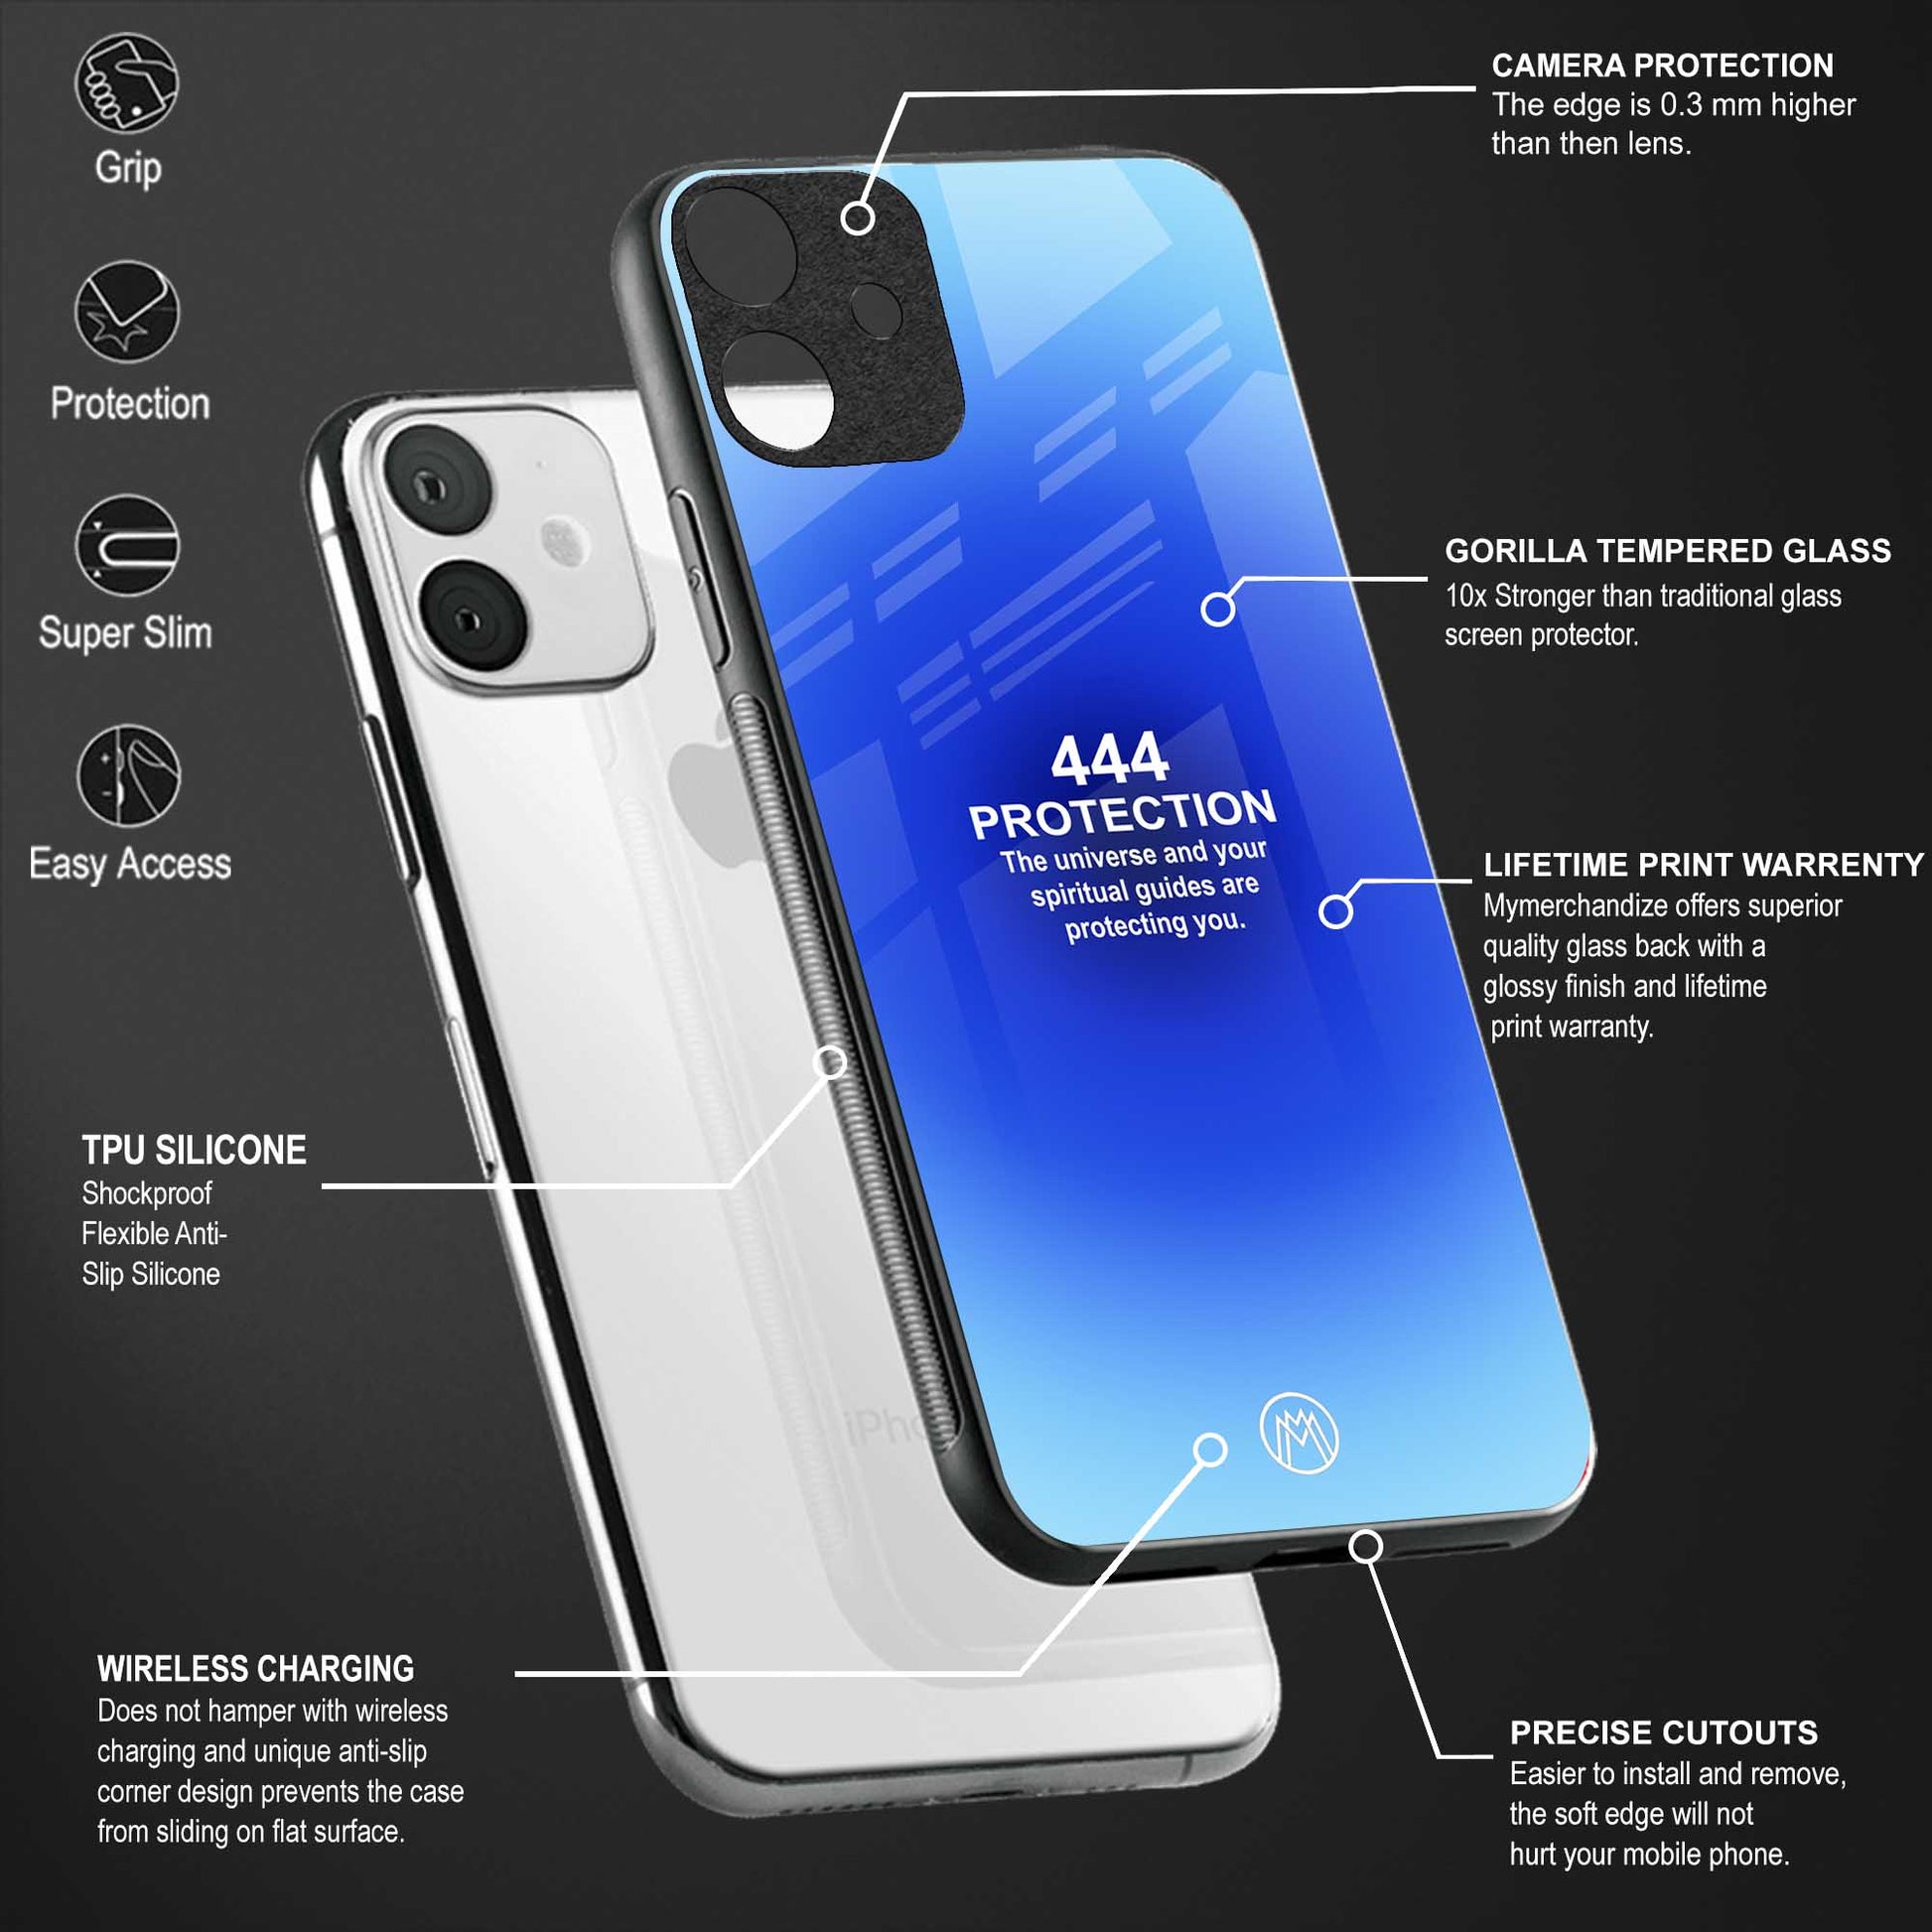 444 protection back phone cover | glass case for vivo v25 pro 5g